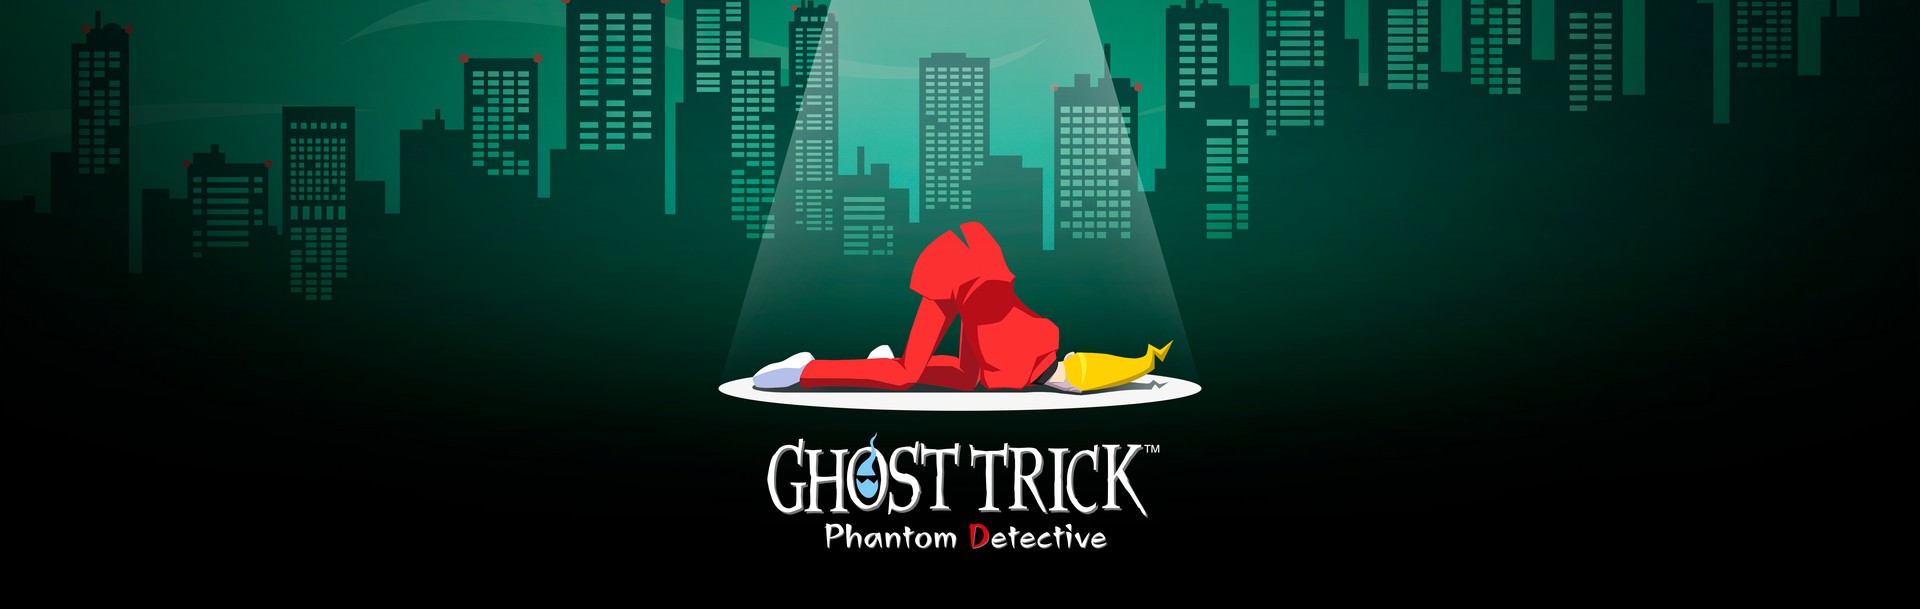 Ghost Trick: Phantom-Detektiv